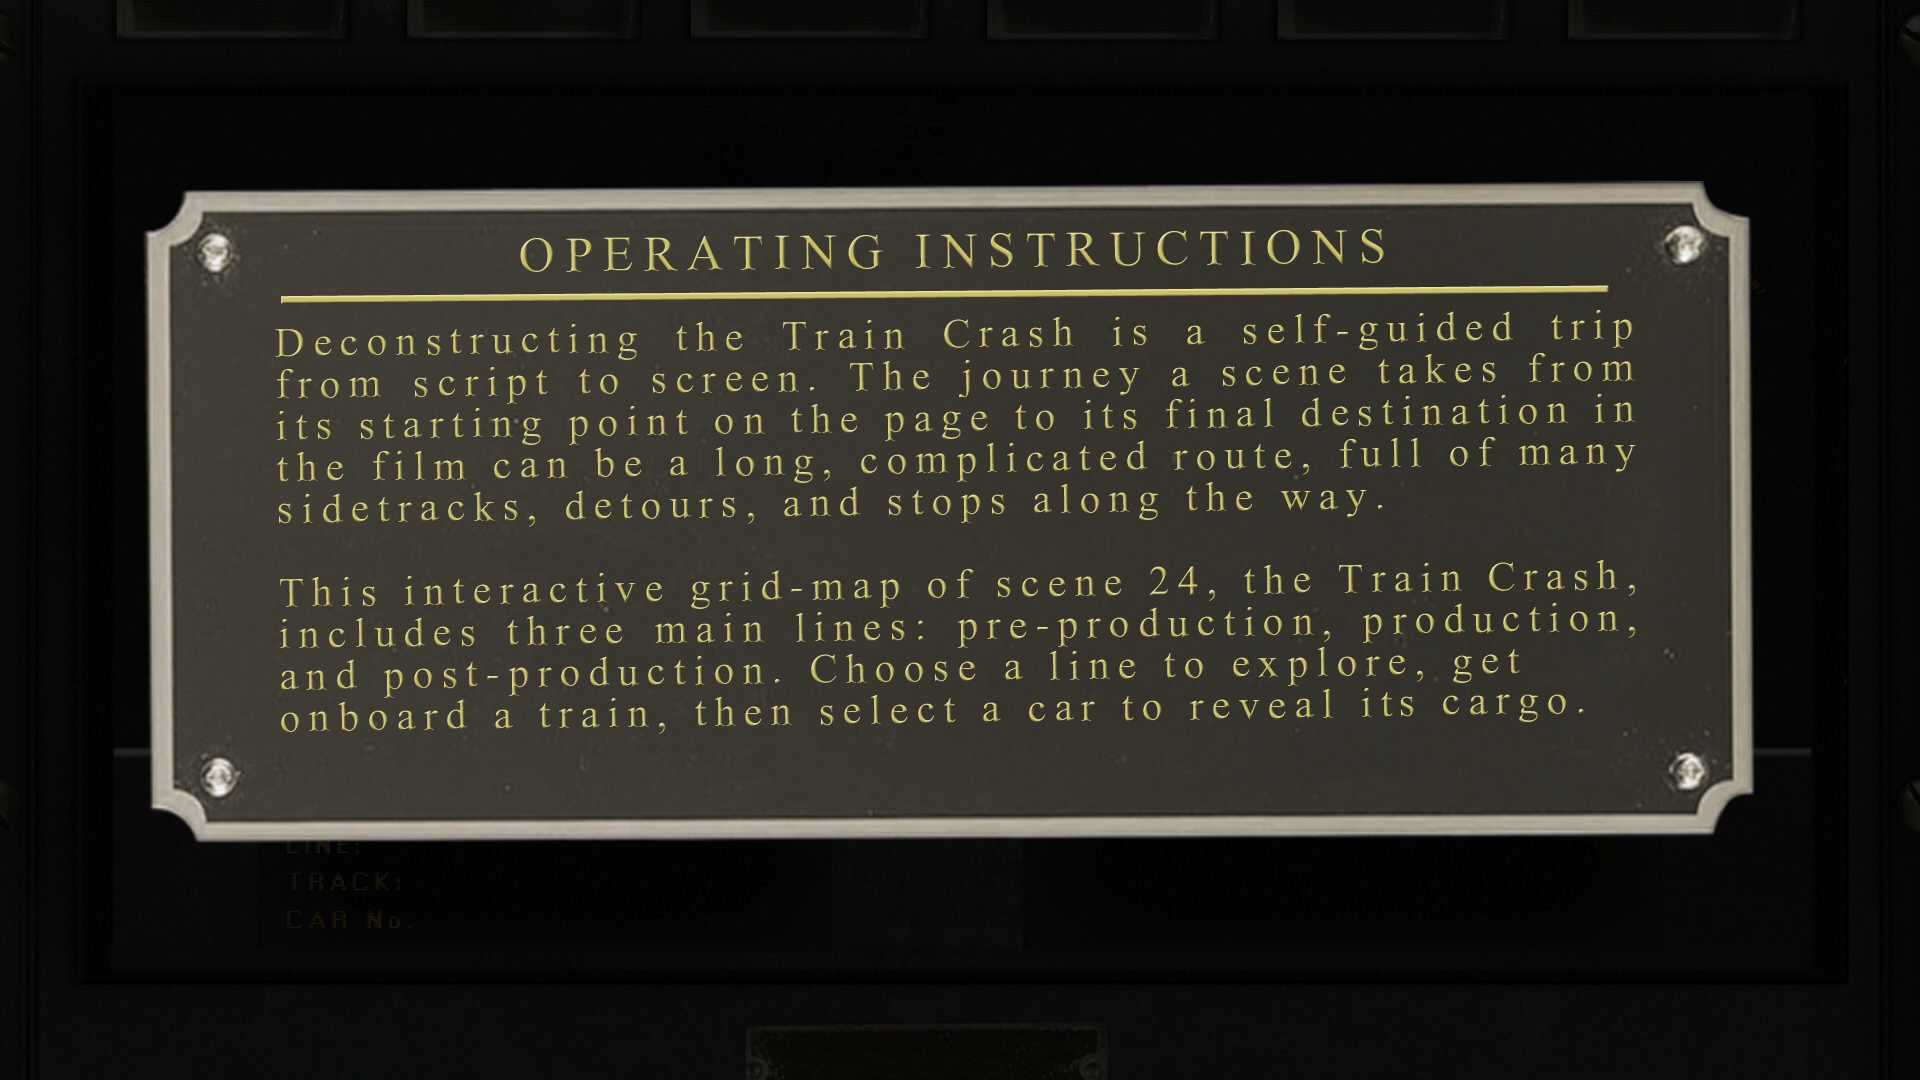 Deconstructing the Train Crash